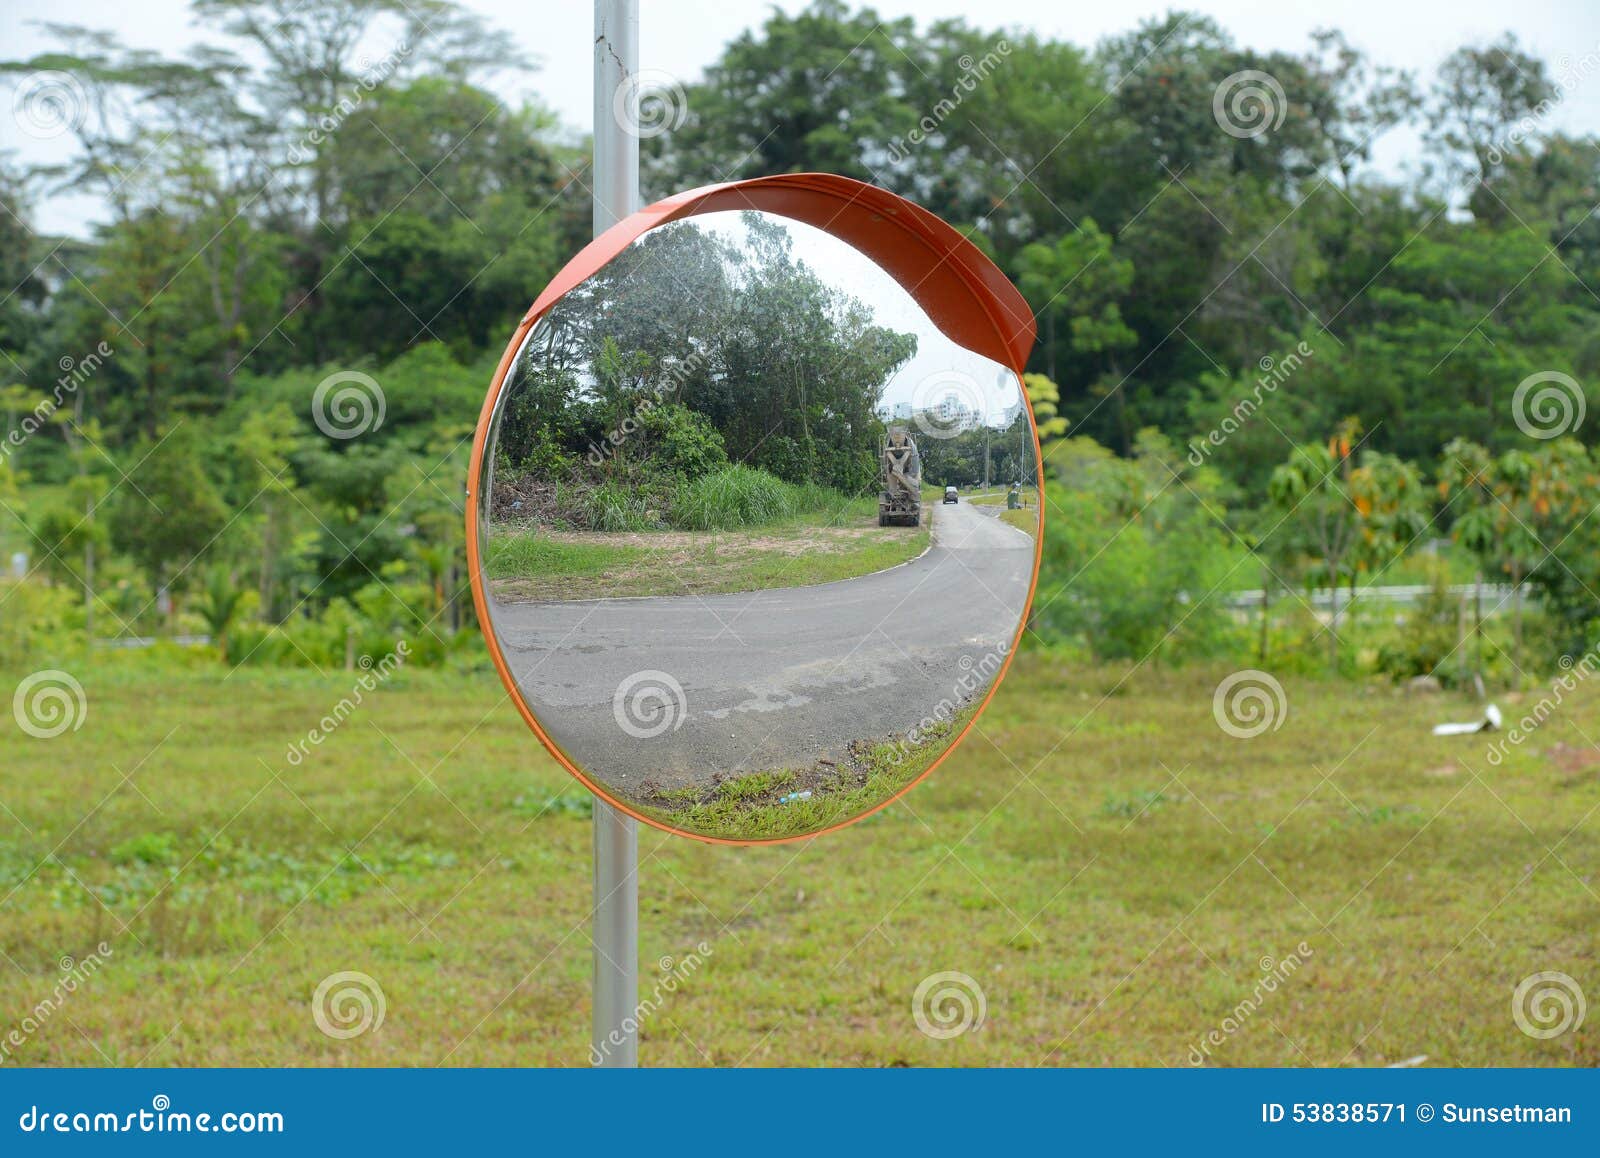 convex road safety mirror